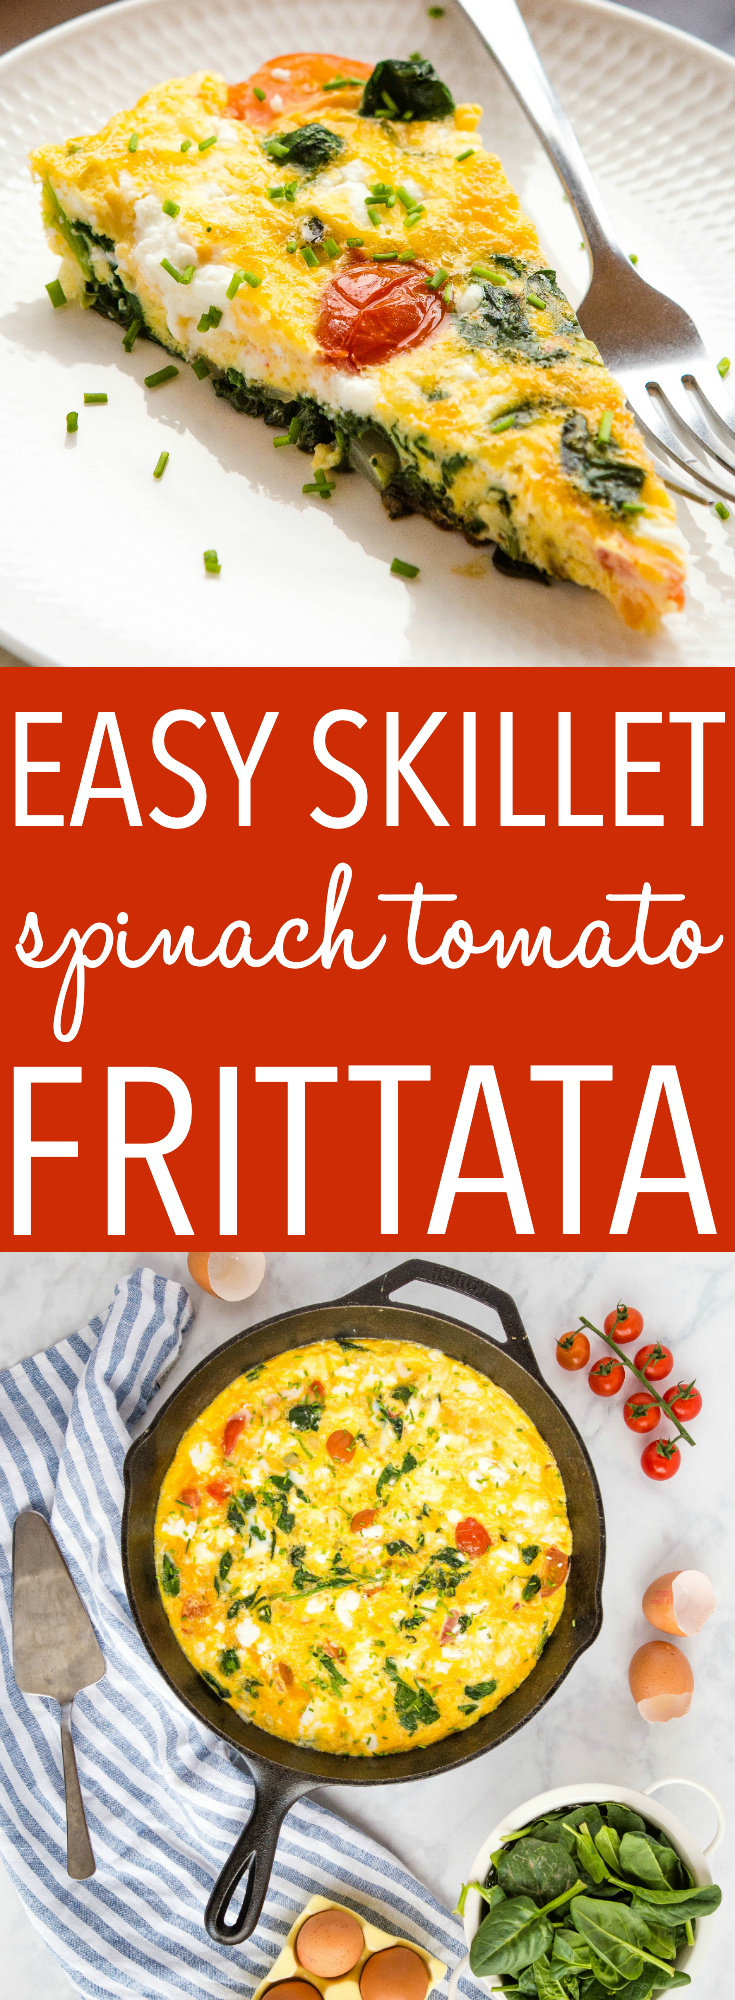 Easy Skillet Spinach Tomato Frittata Recipe Pinterest